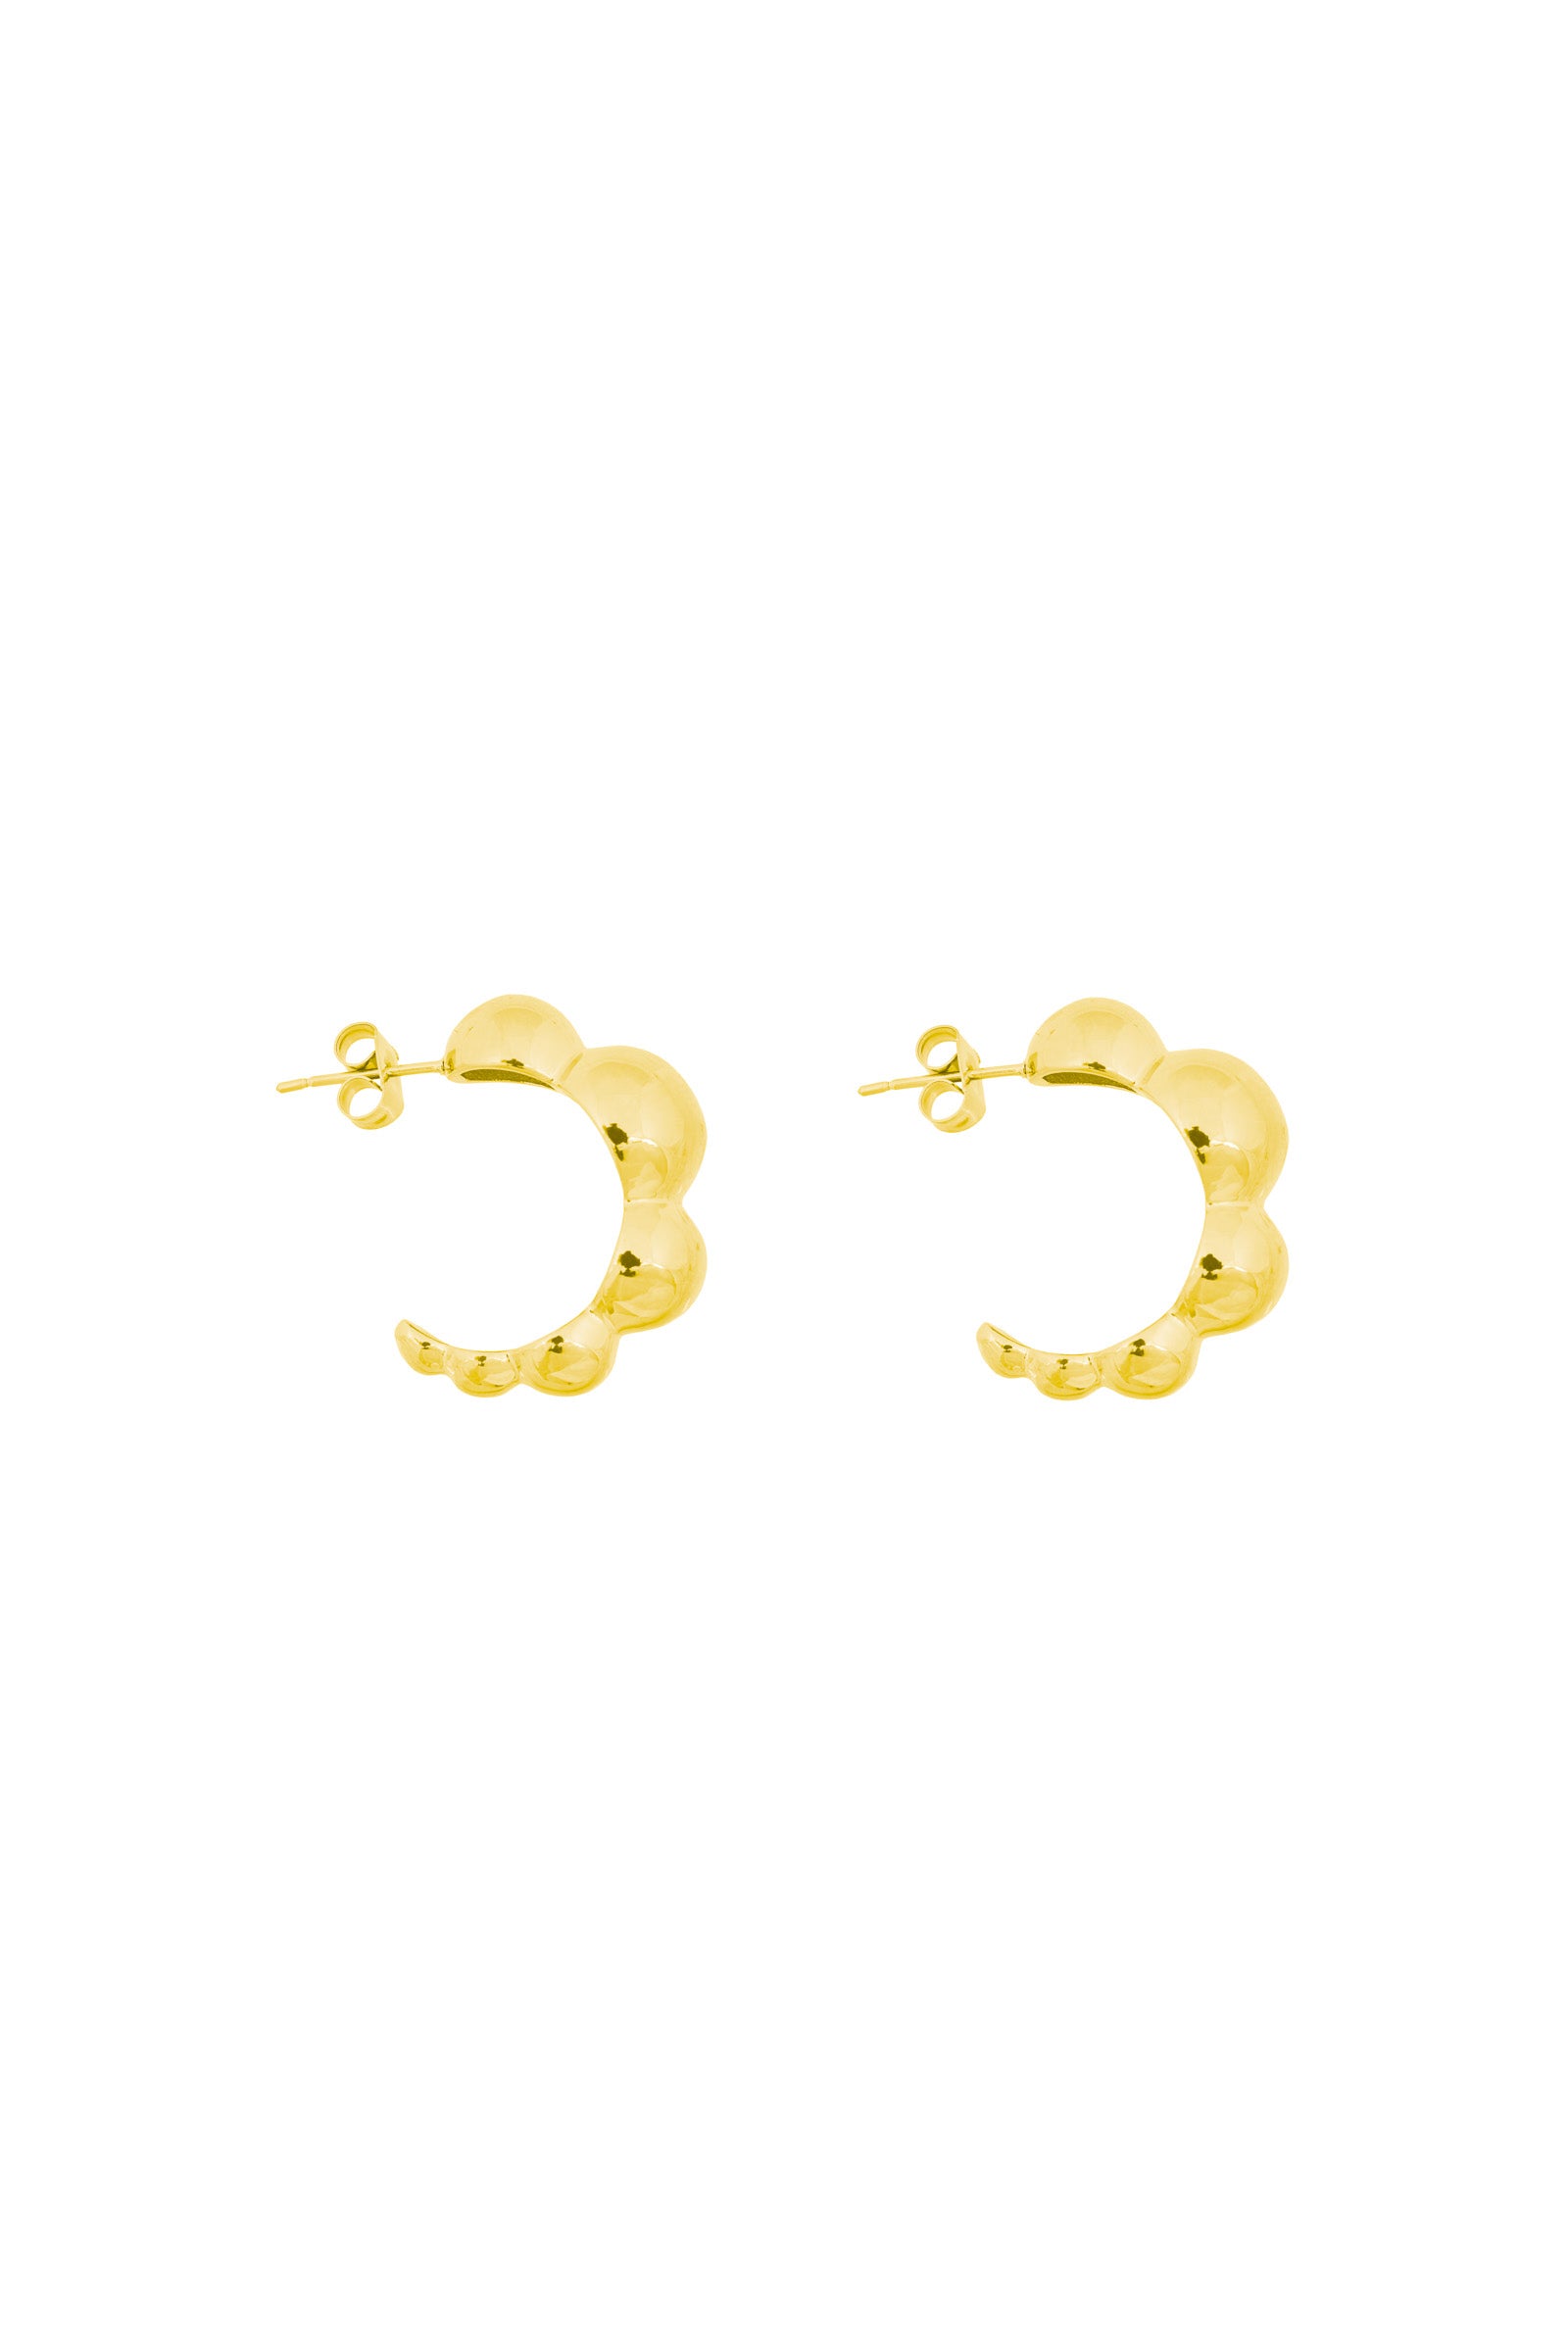 Bandhu Dot Earrings - Gold - RUM Amsterdam